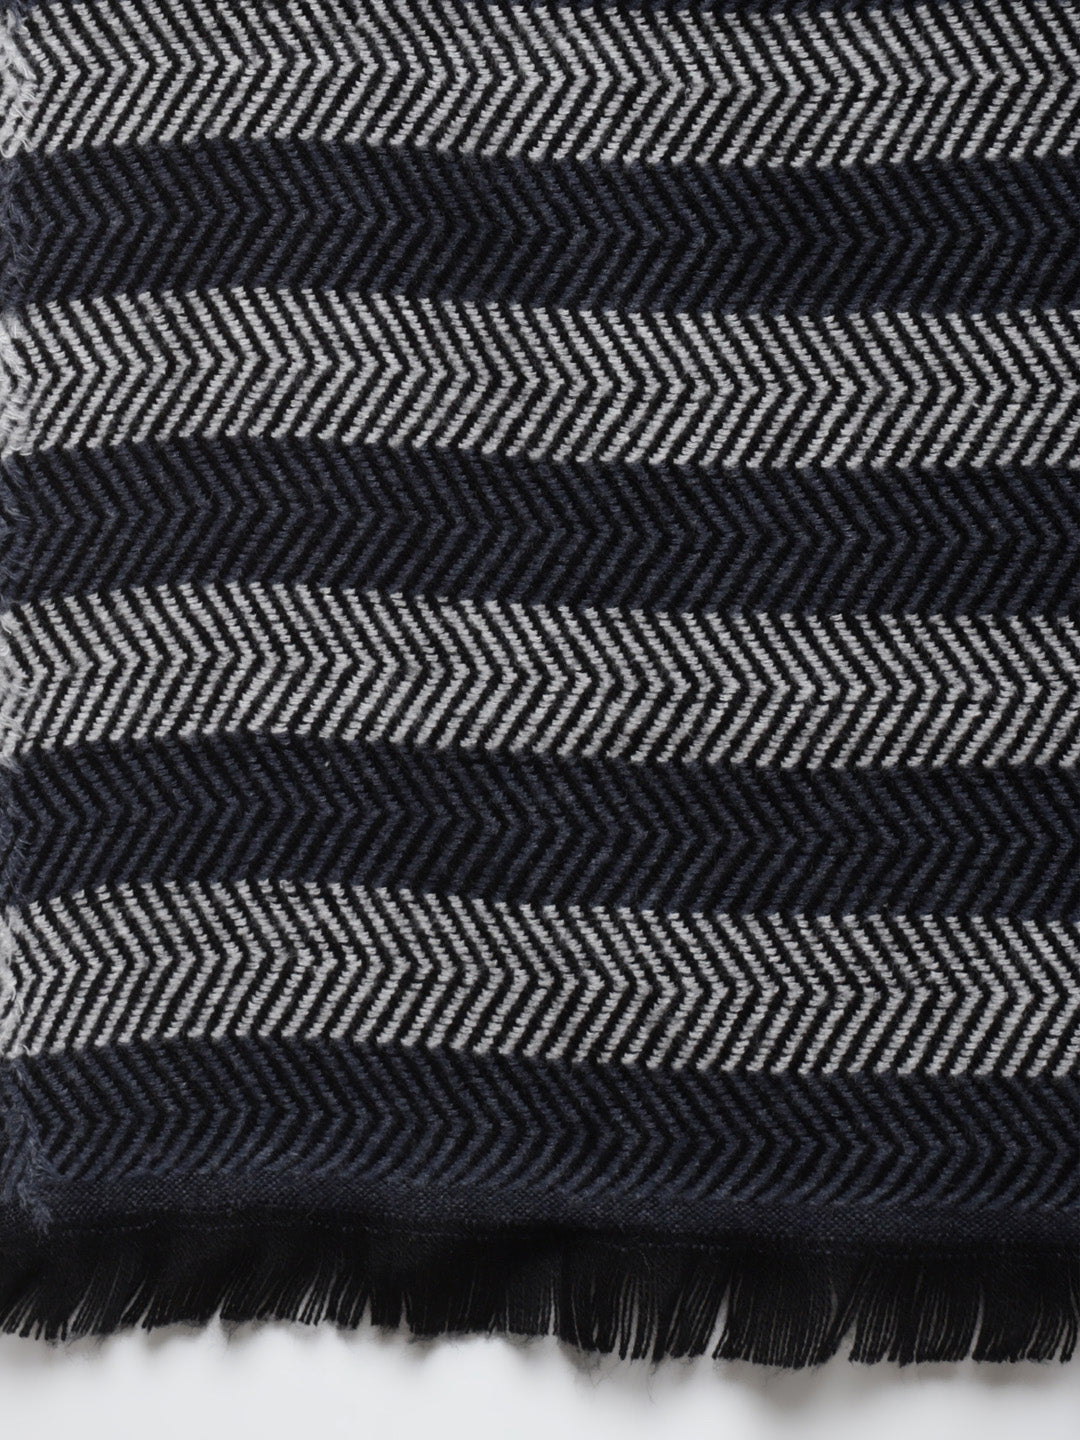 Navy & Black Acrylic Poly Cotton Chevron Stole